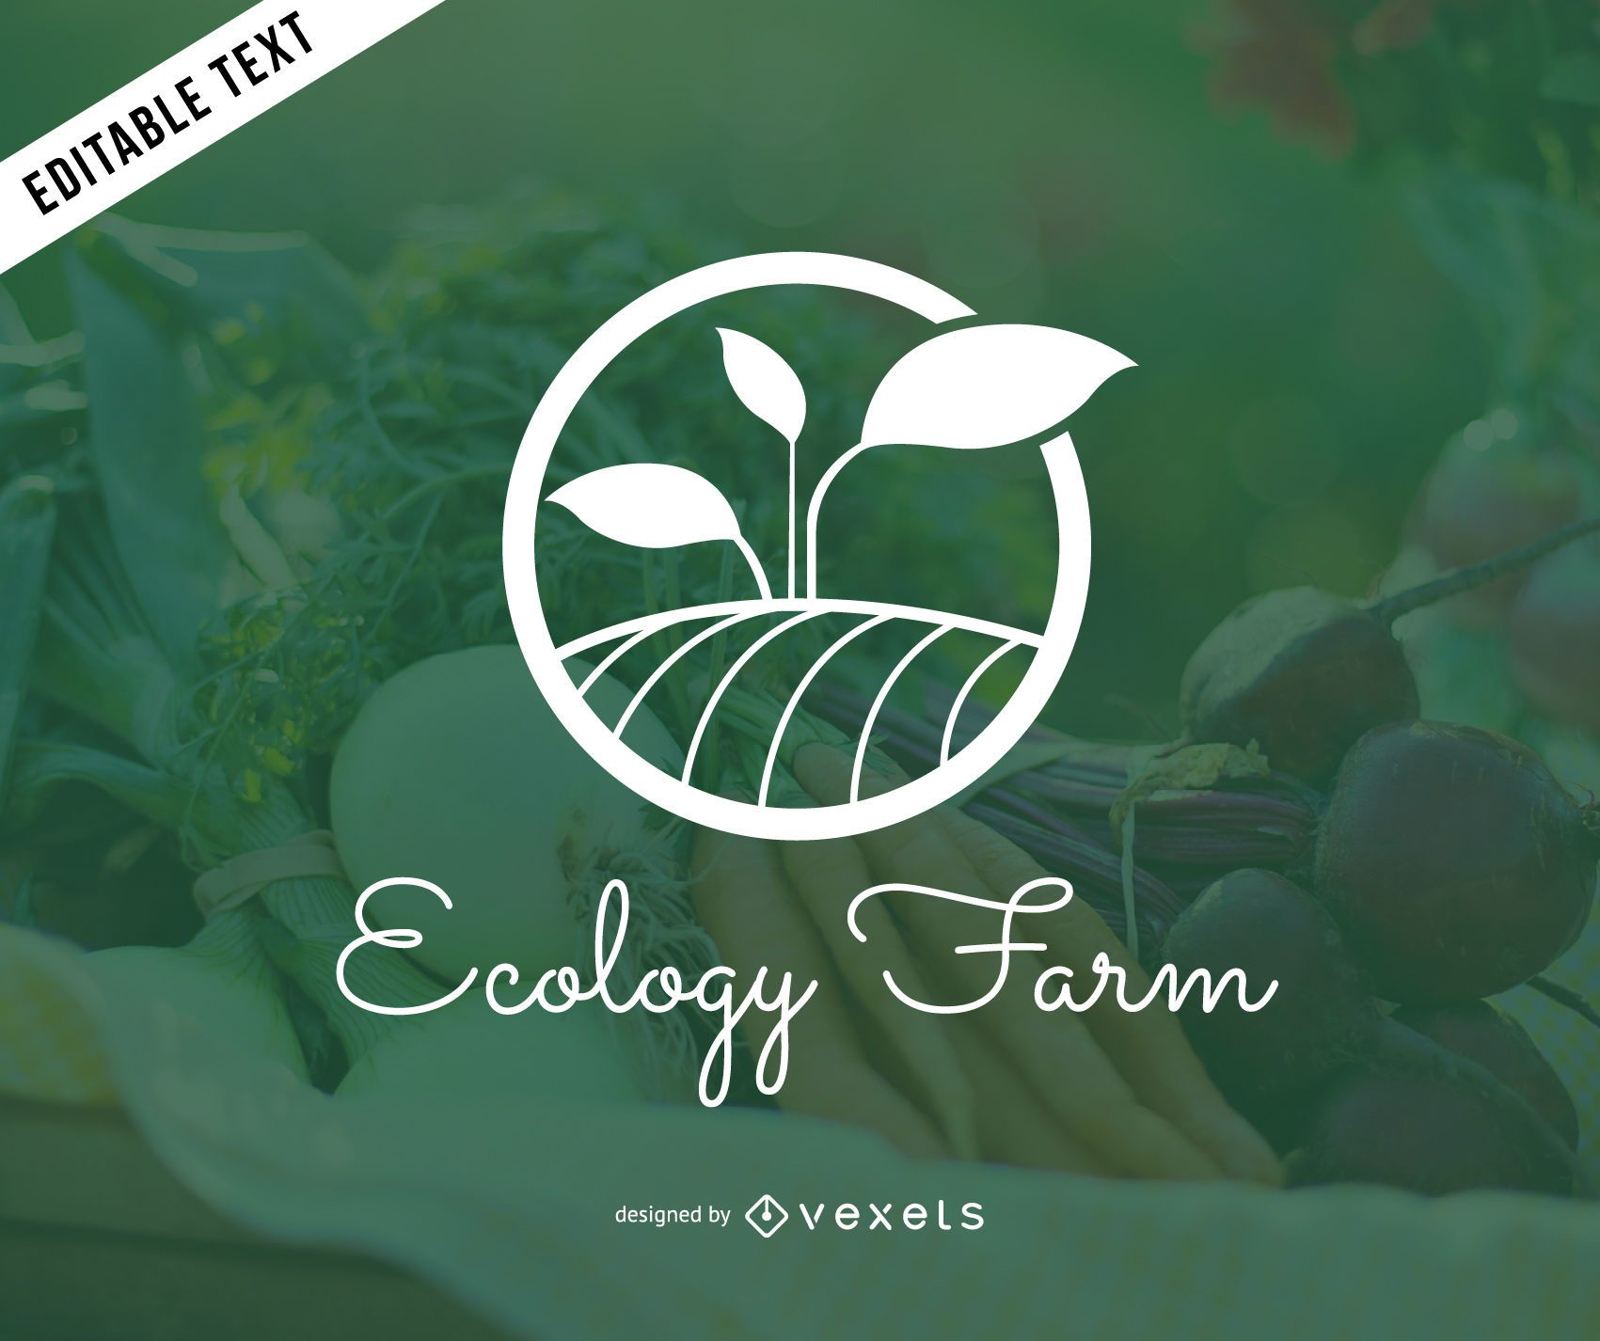 Plantilla de logotipo verde Ecology Farm